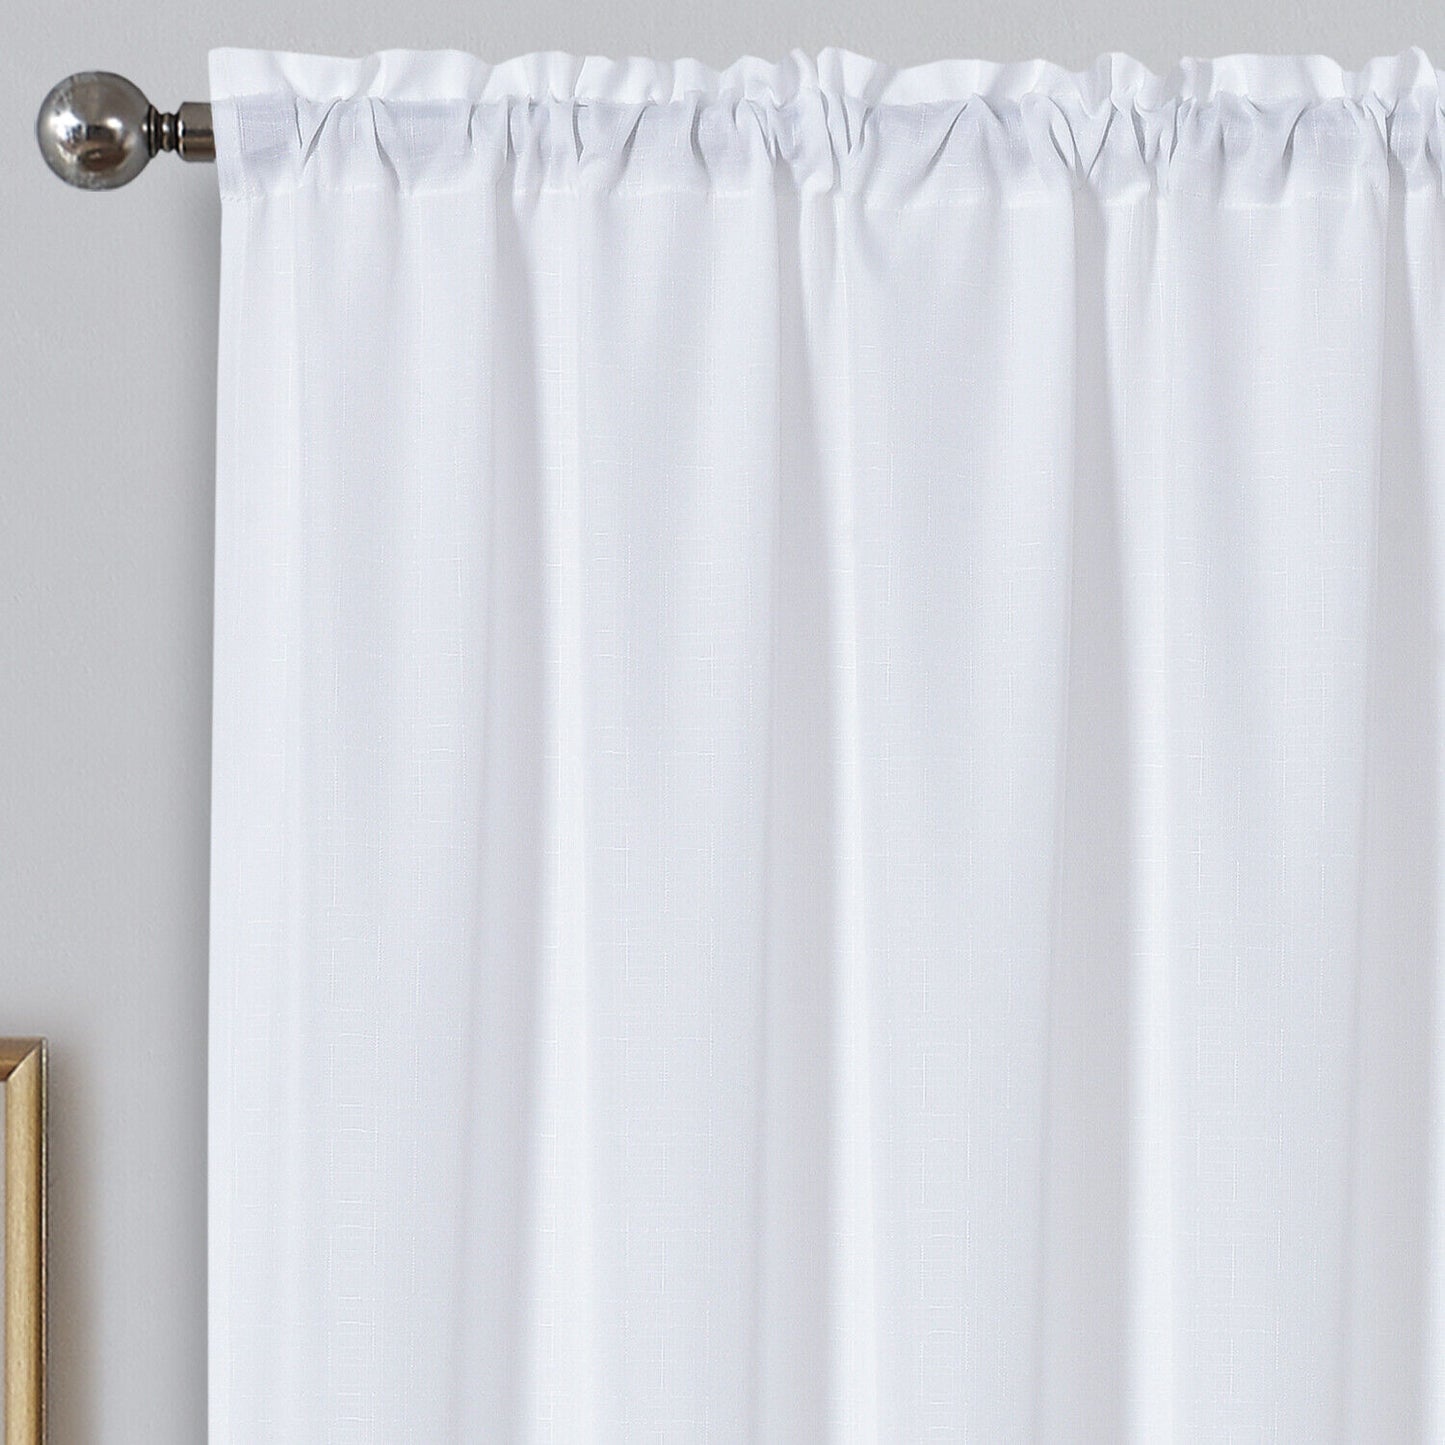 Linen Look Voile 59" x 90" White Window Curtain Drapes Textured Plain Slot Top